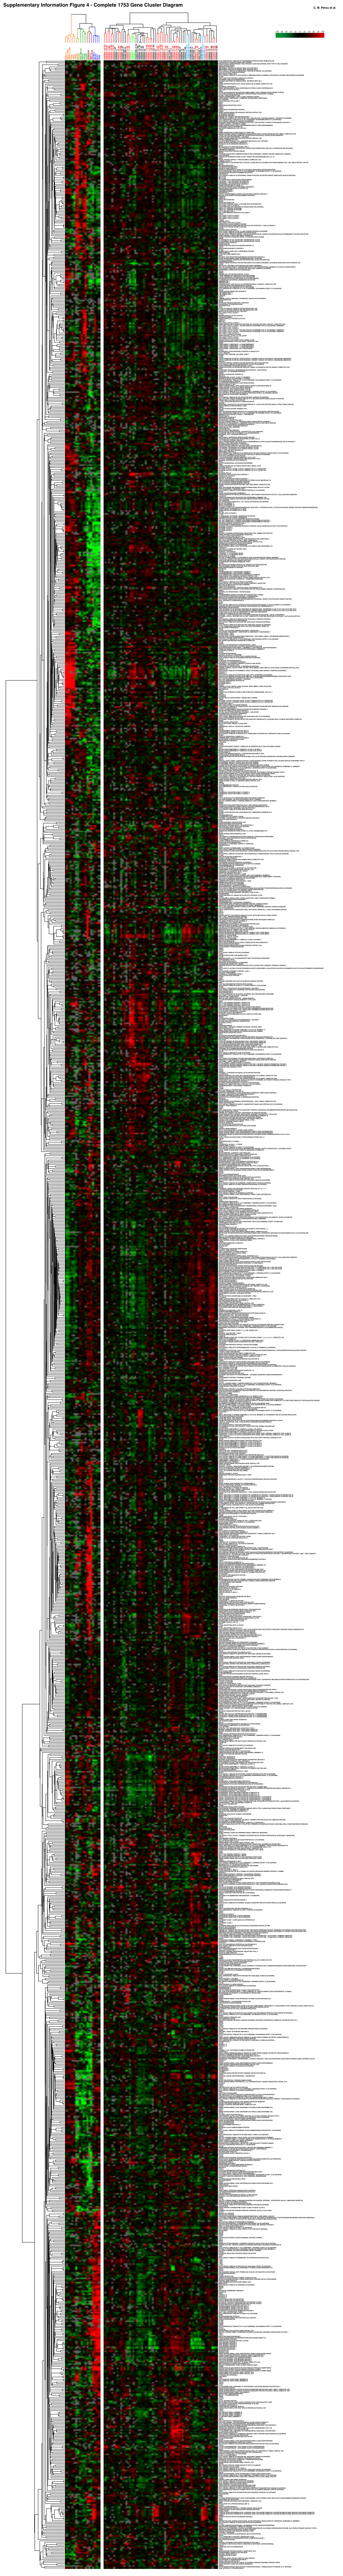 Supplementary Information Figure 4 - Complete 1753 Gene Cluster Diagram C